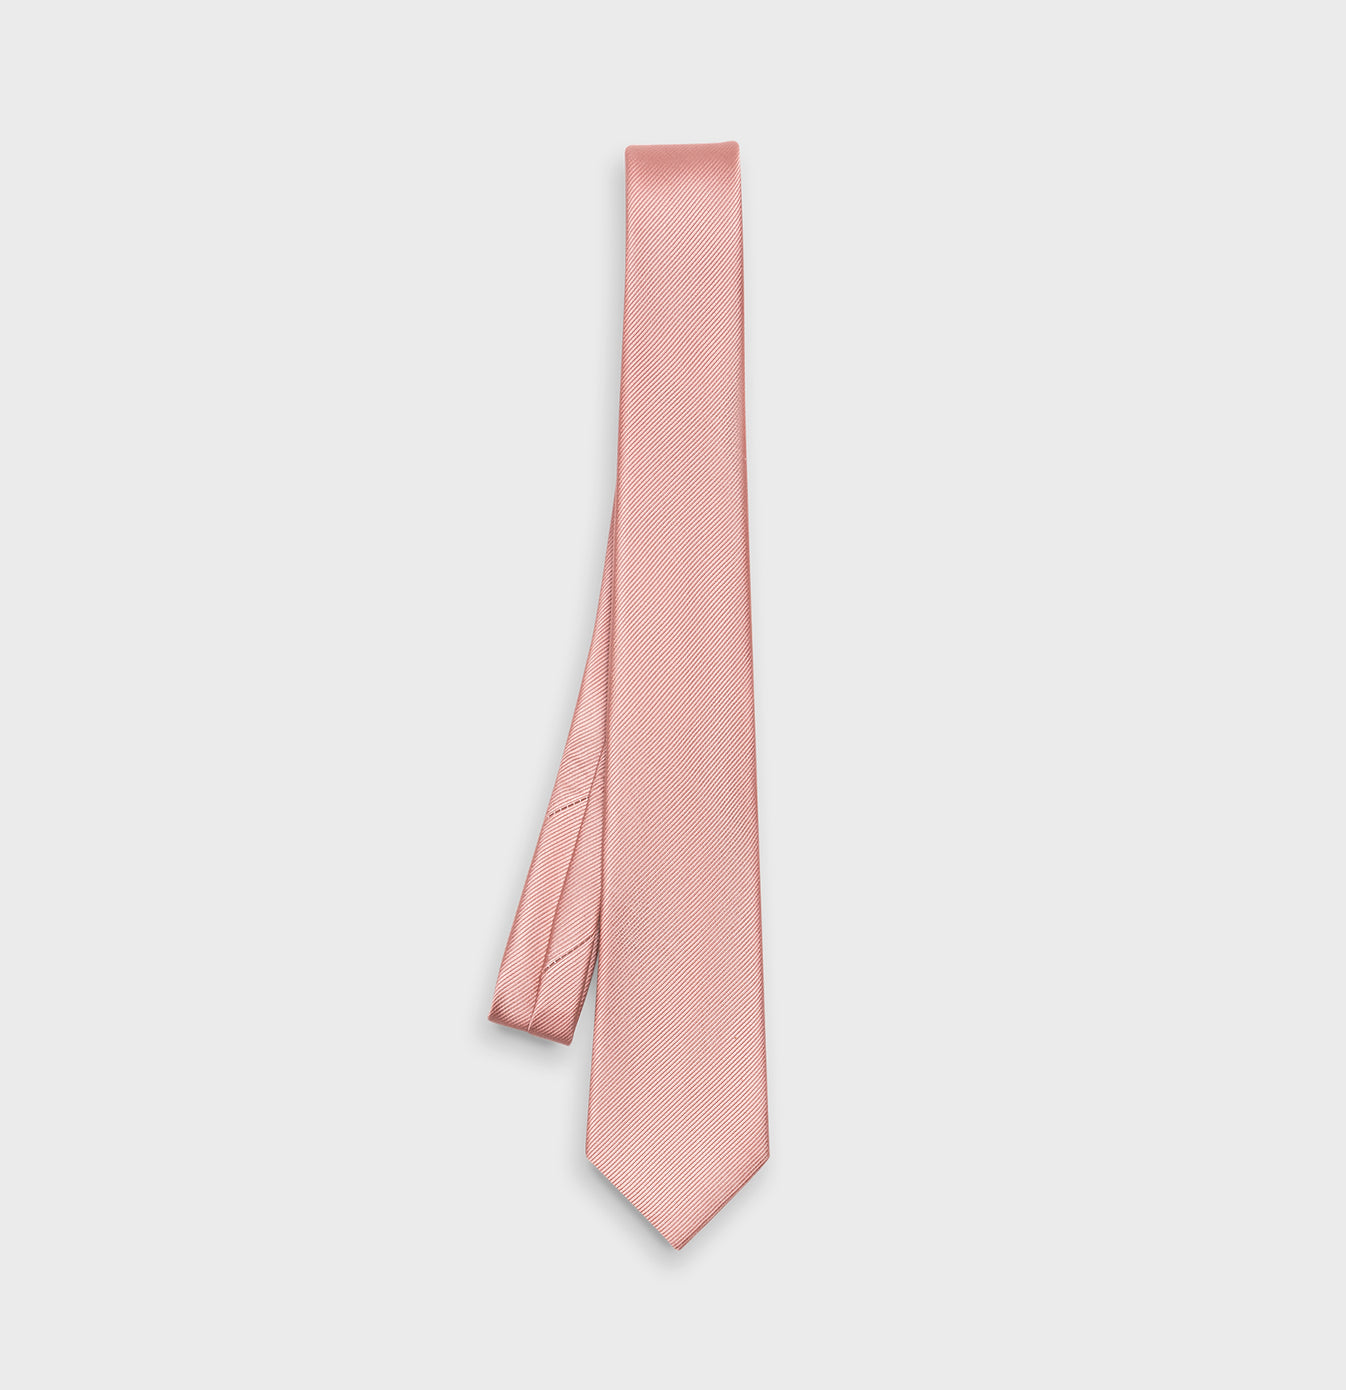 Dusty Rose Necktie